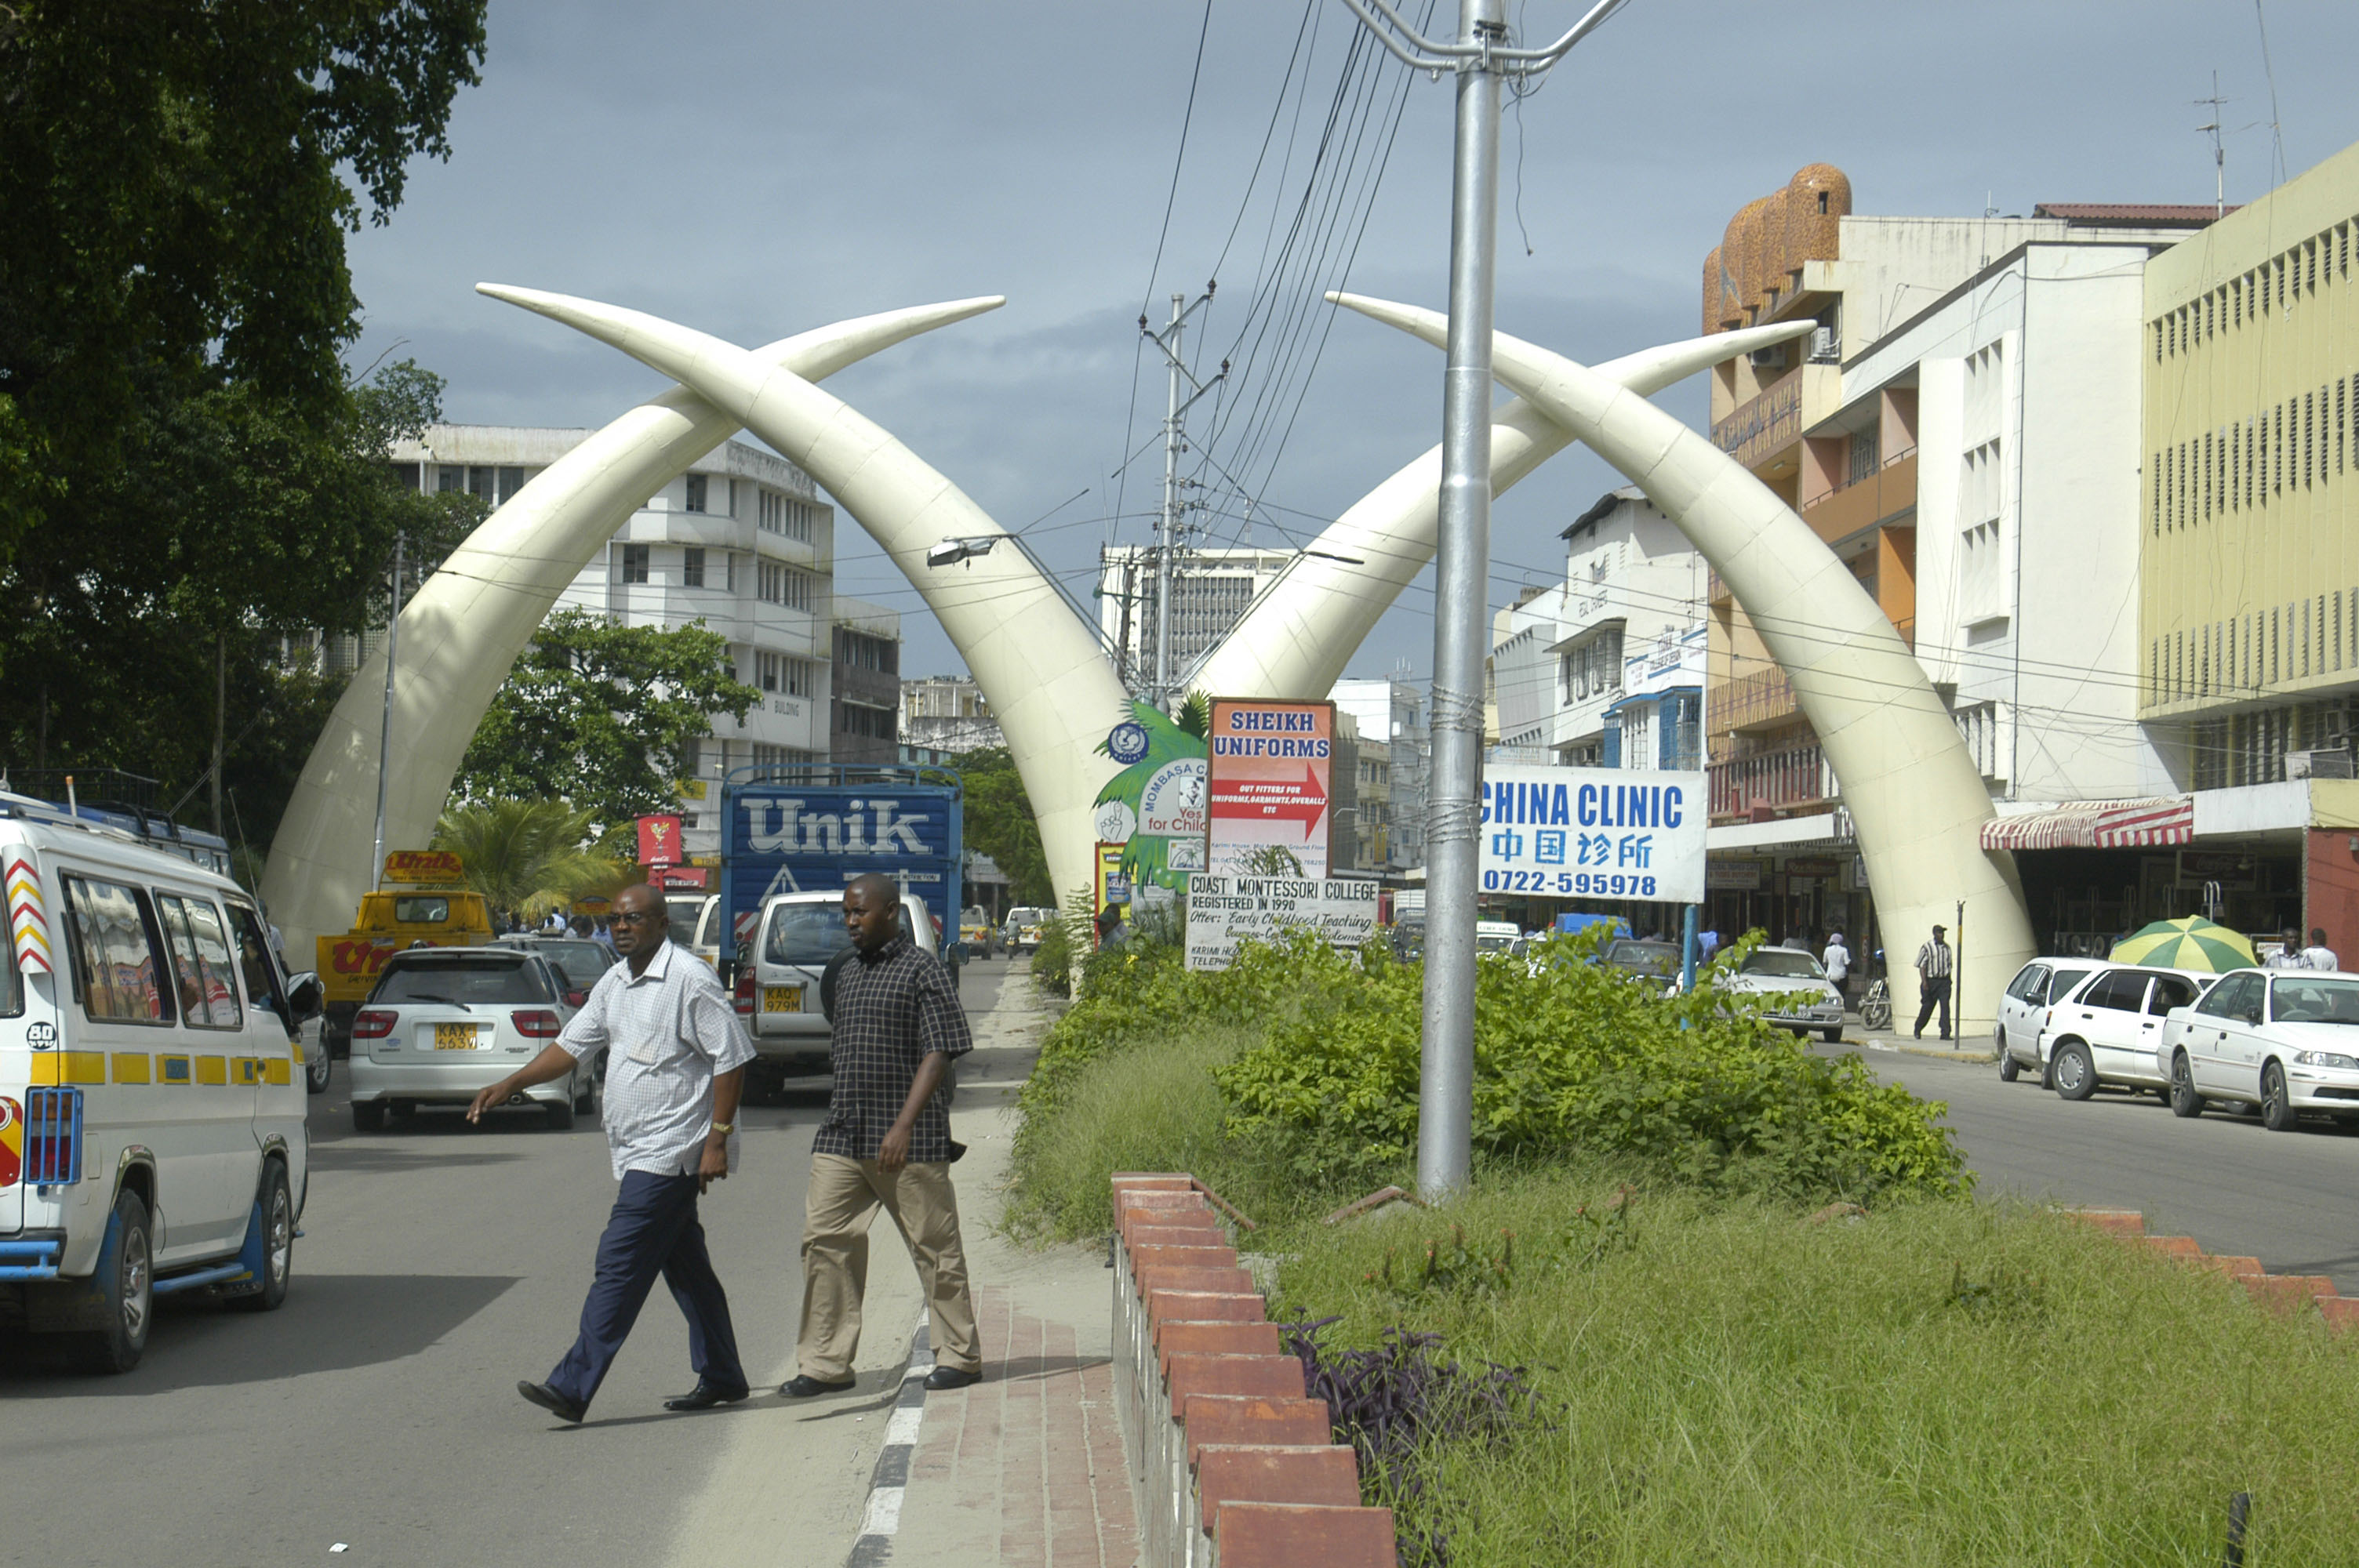 Resultado de imagem para mombasa kenya